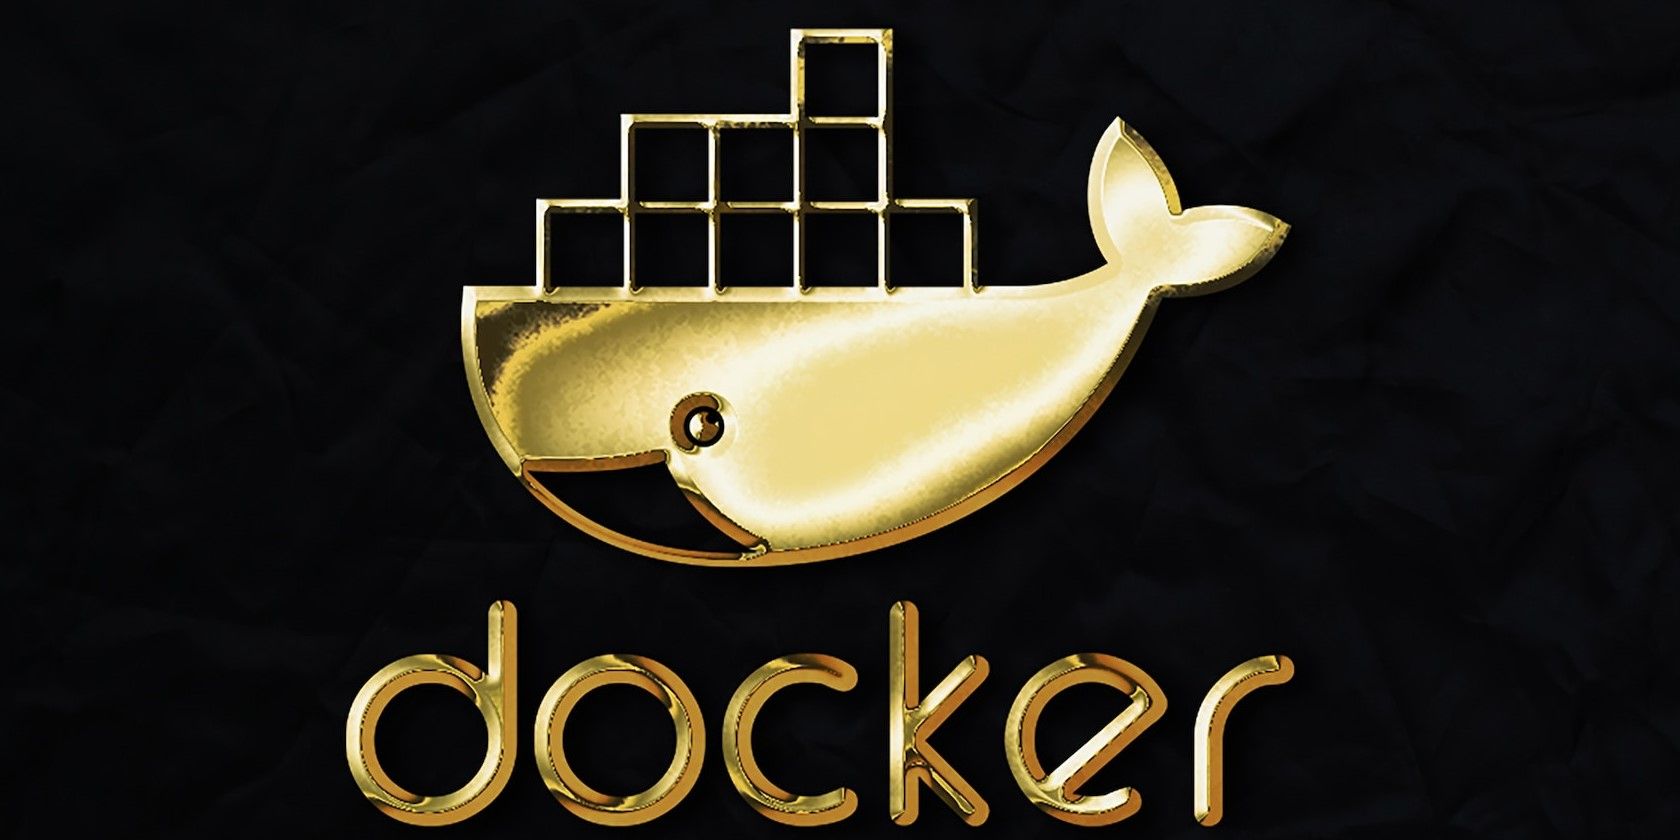 Golden docker logo on a black background